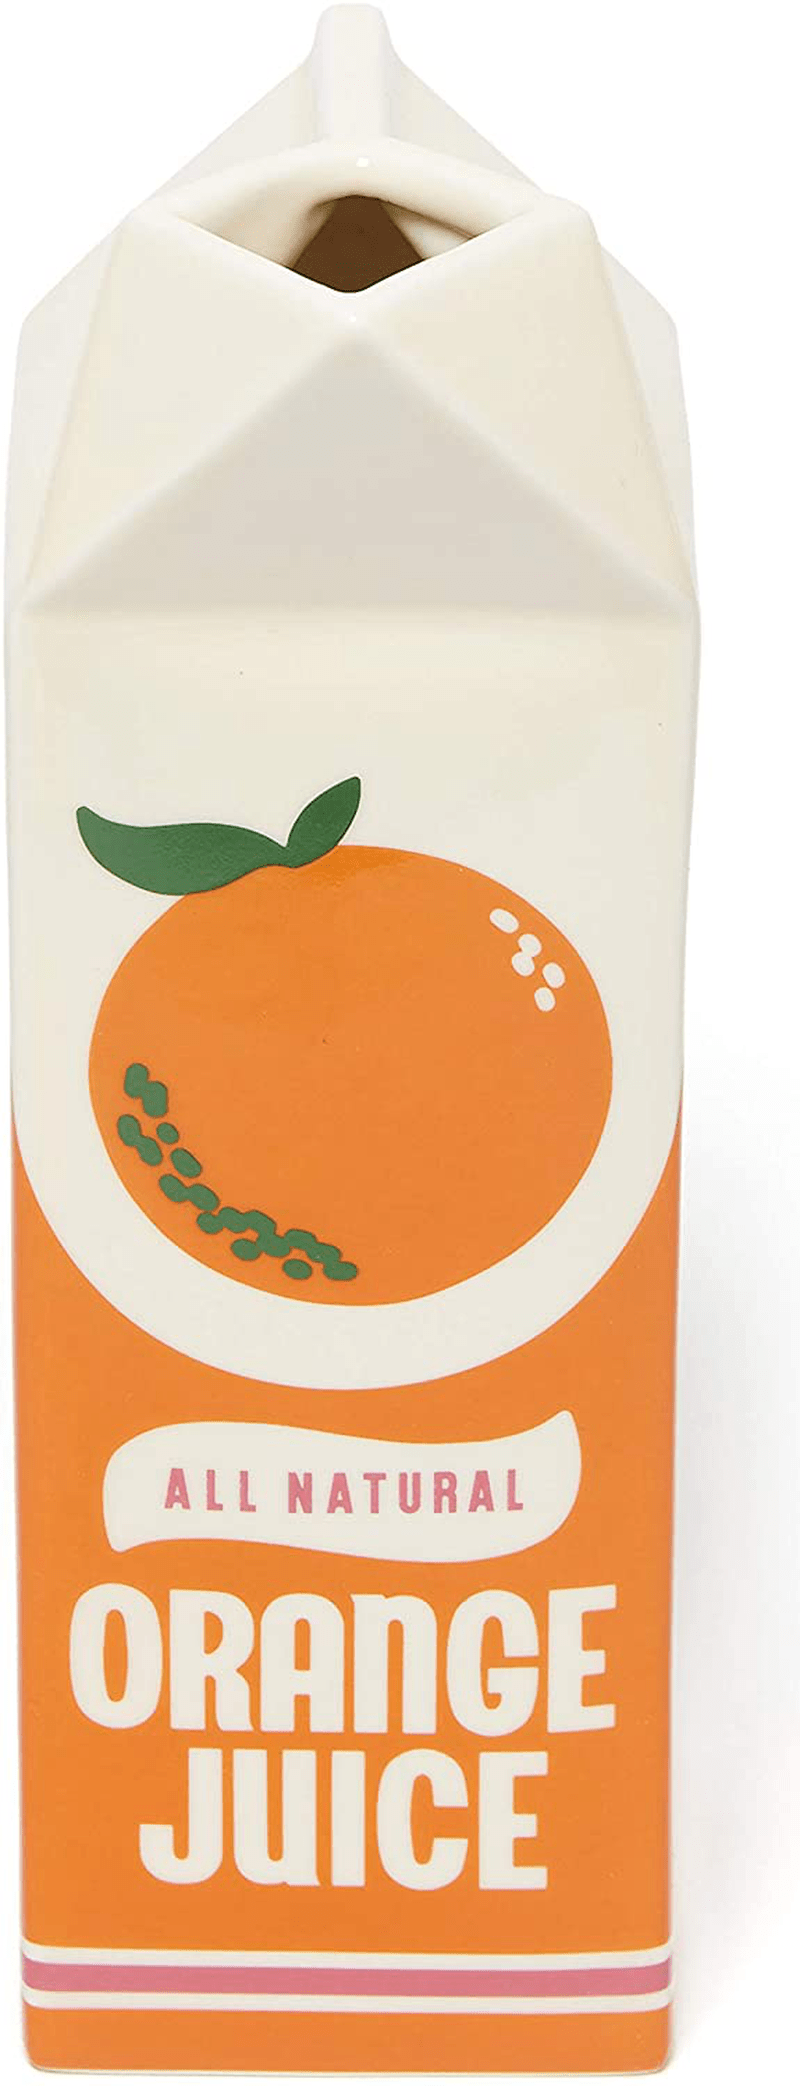 ban.do Vintage Inspired Rise and Shine Decorative Ceramic Vase, Unique Home/Kitchen/Office Accent, Orange Juice